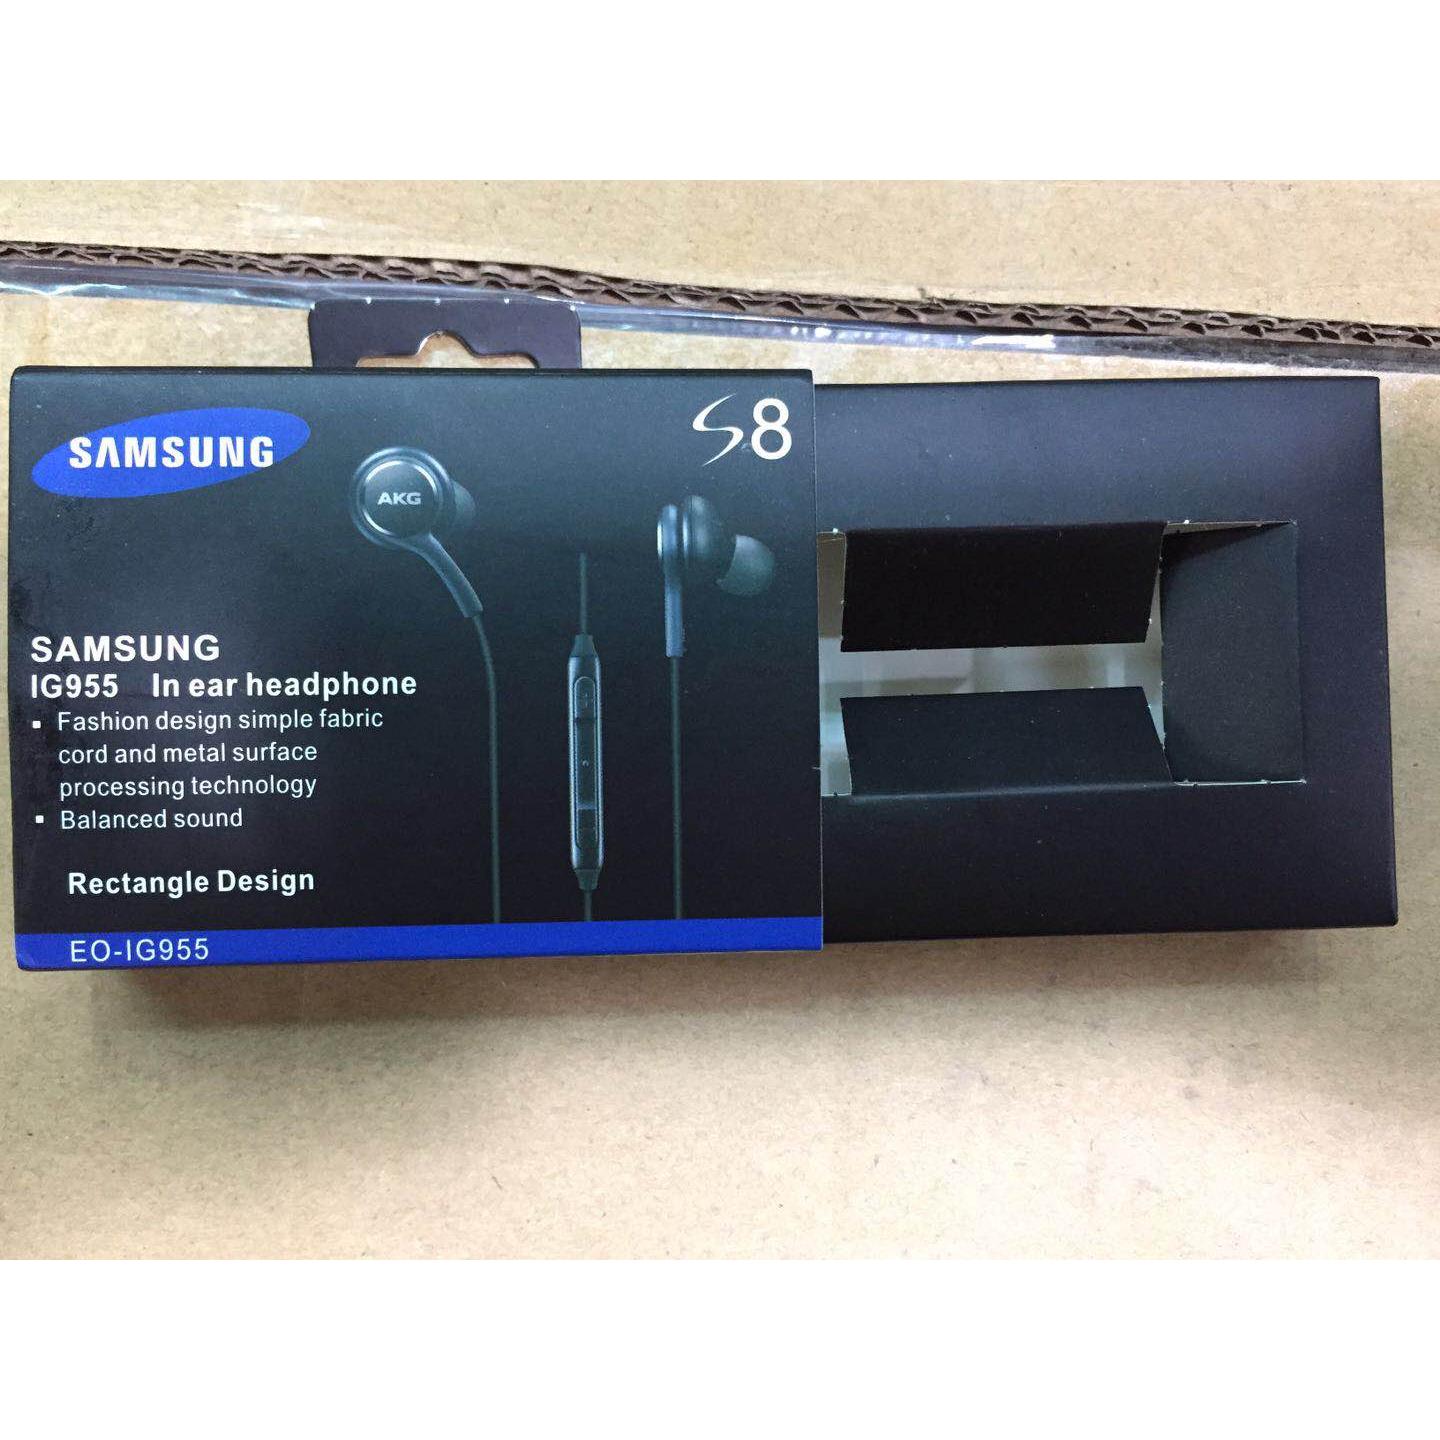 Samsung Samsung s8 headset AKG earphone Wholesale Suppliers